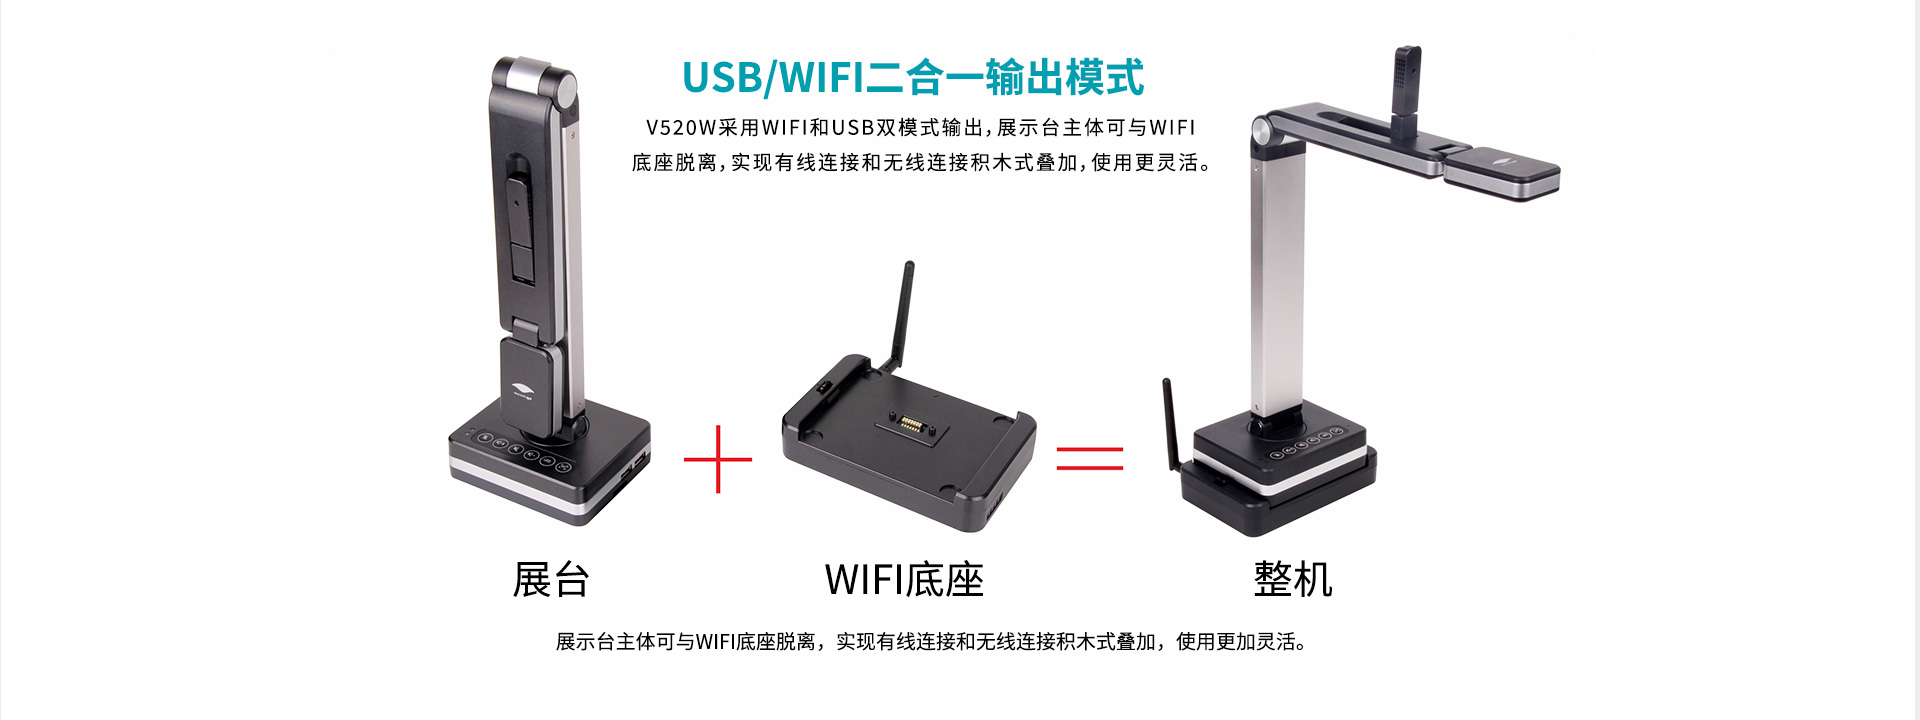 wifi无线高拍仪USB和WIFI二合一输出模式